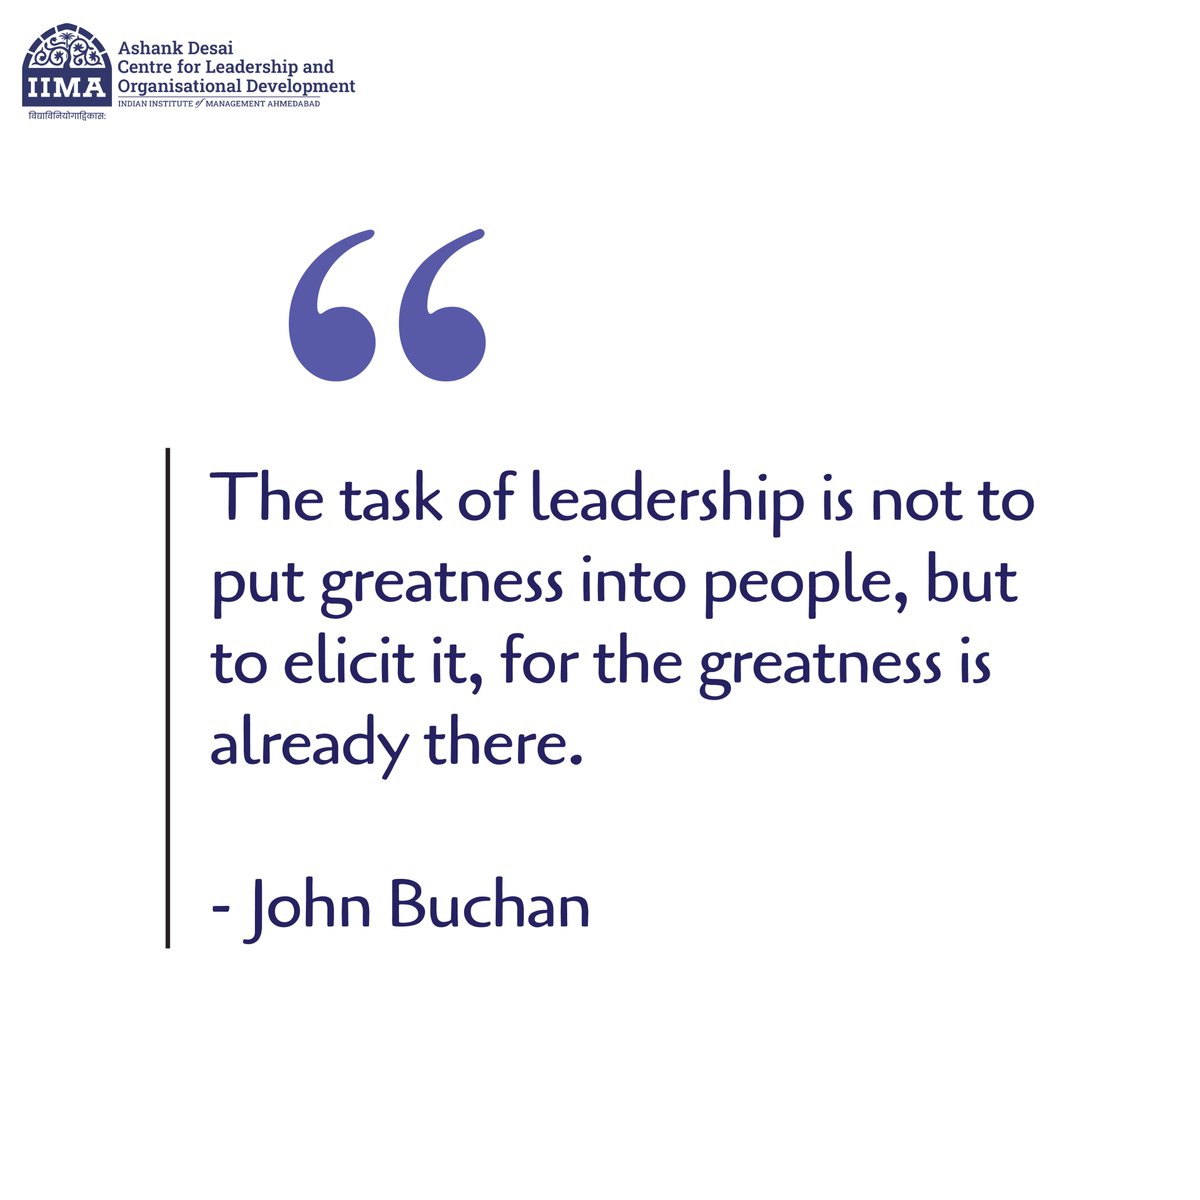 #leadership #inspiringleadership #leadbyexample #leadwithintegrity #leadershipskills #LeadershipMatters #effectiveleadership #LeadershipDevelopment 
@coachpiyush